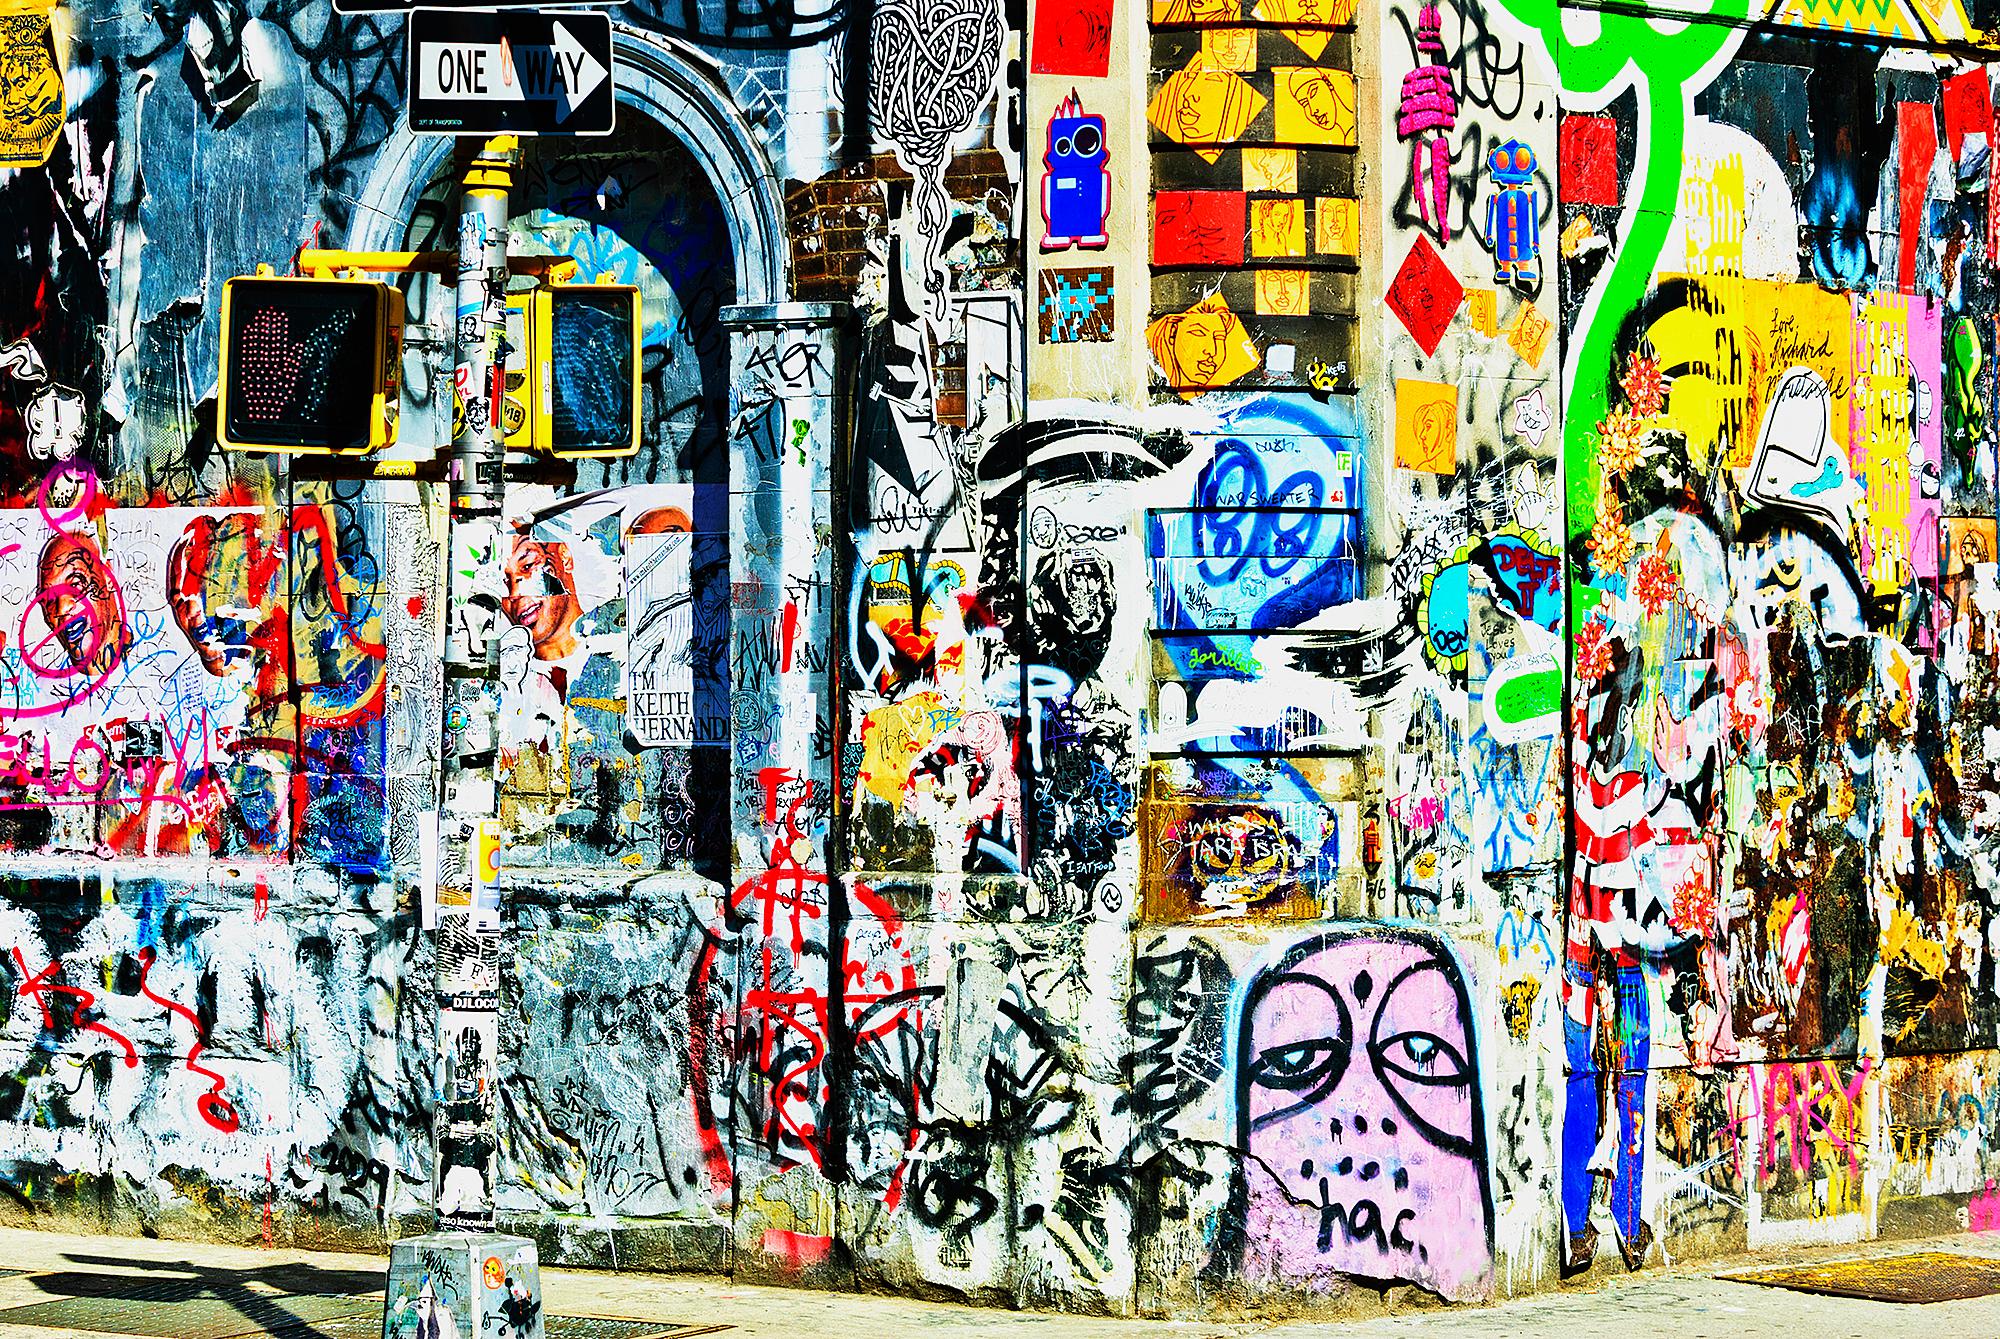 Mitchell Funk Color Photograph - Urban Art Street Art, Graffiti Wall In Soho, New York City, Abstract Photography